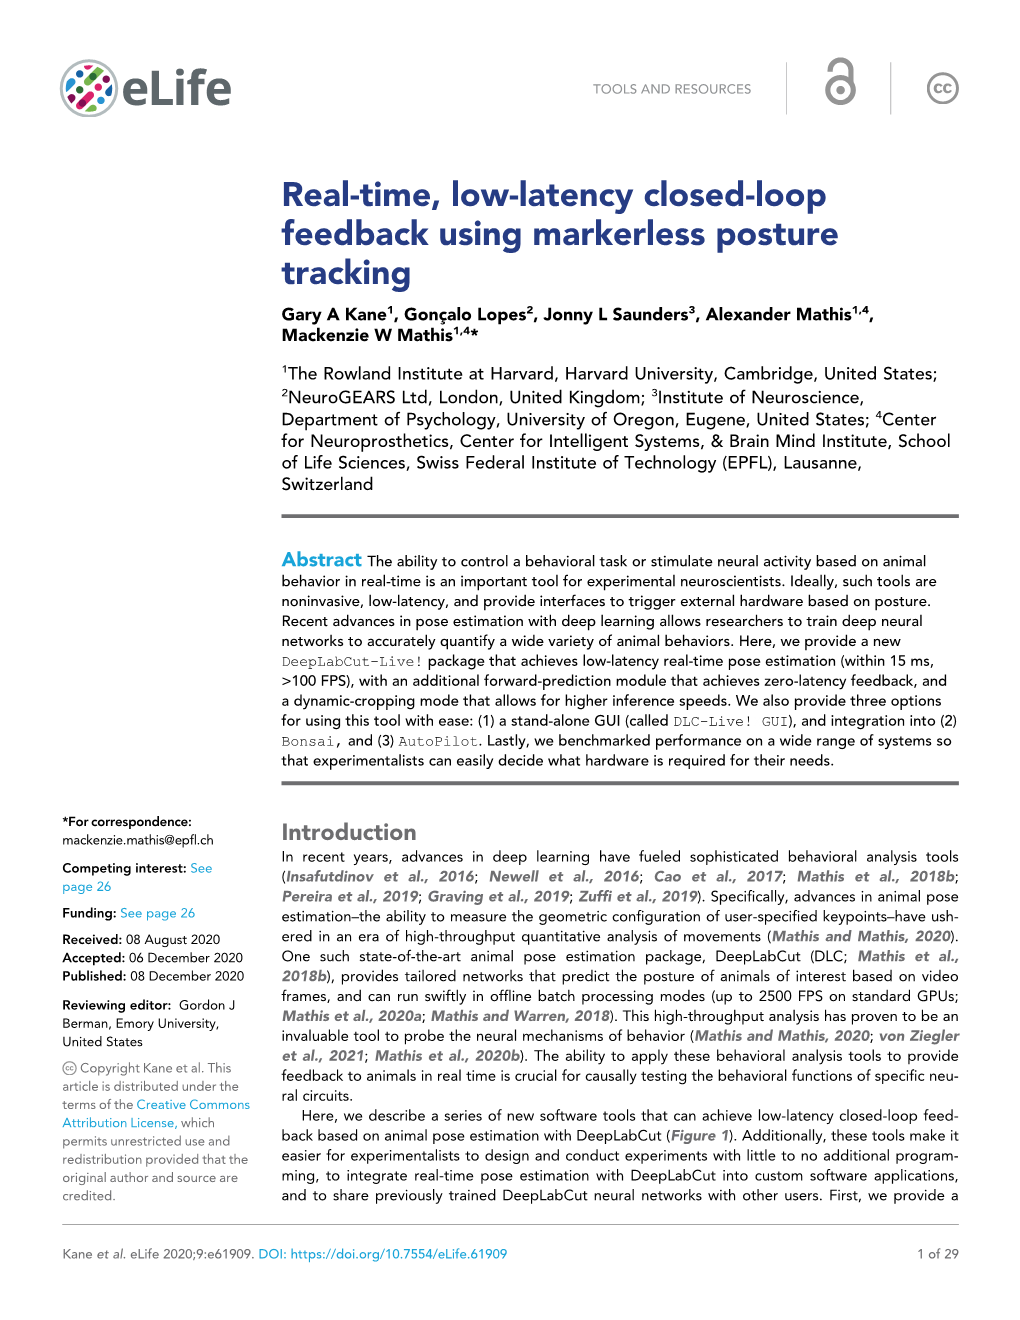 Real-Time, Low-Latency Closed-Loop Feedback Using Markerless Posture